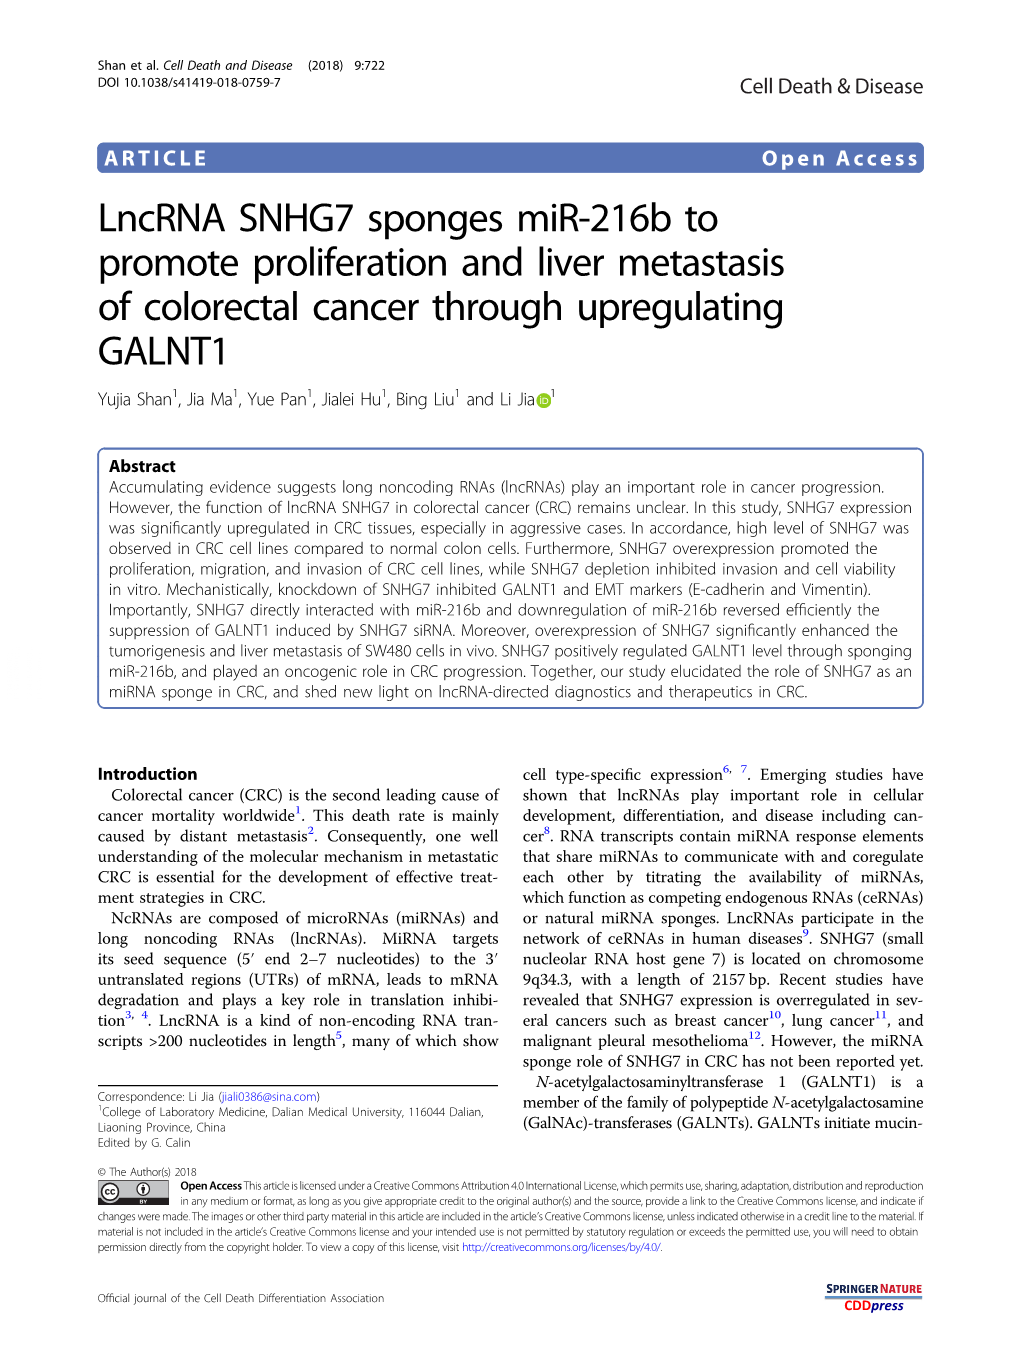 Lncrna SNHG7 Sponges Mir-216B to Promote Proliferation and Liver